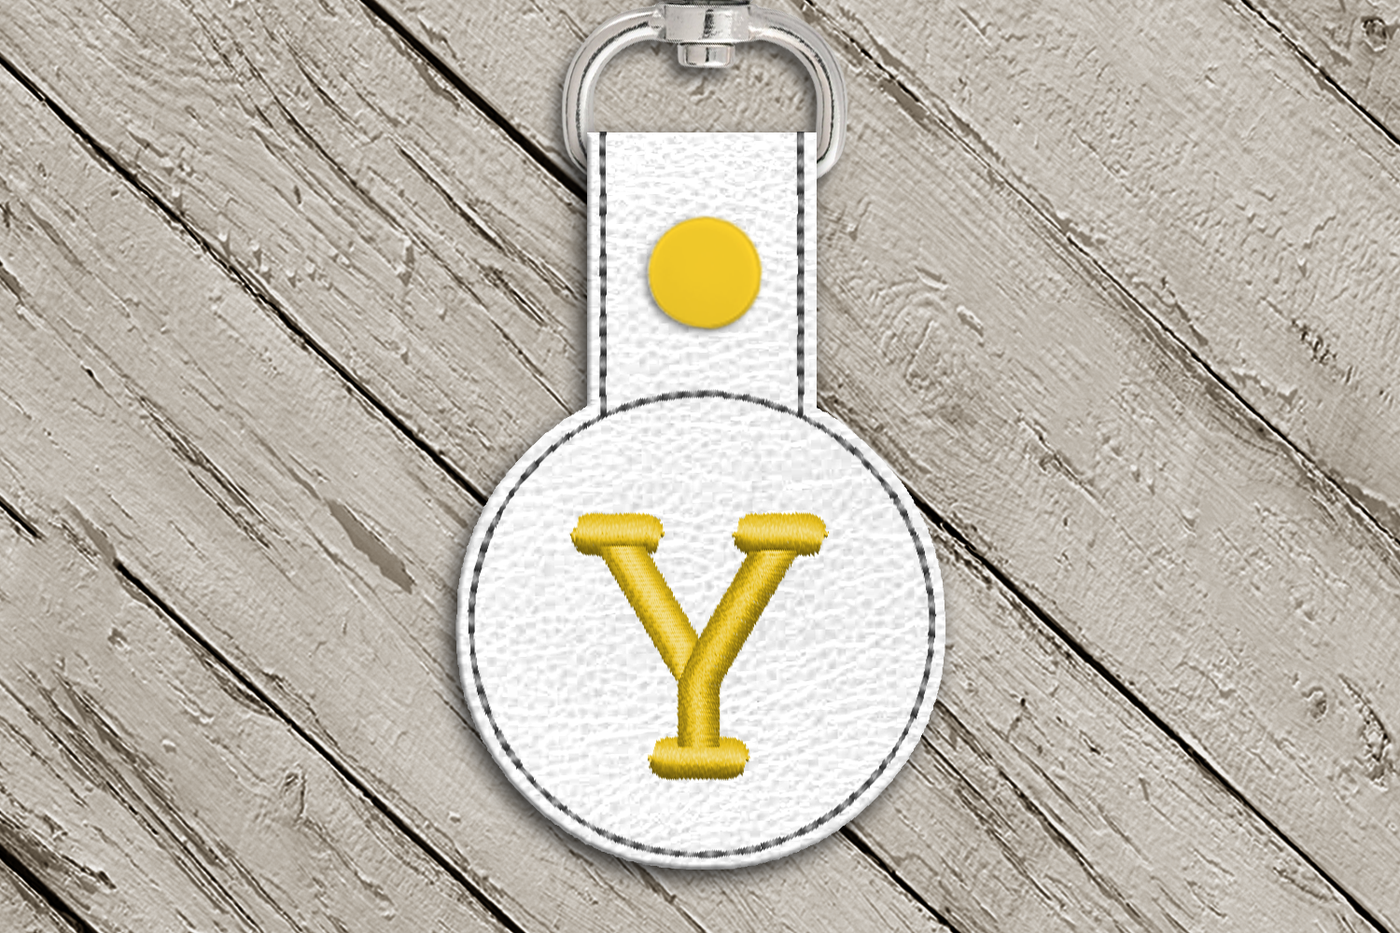 Letter Y in the hoop key fob design